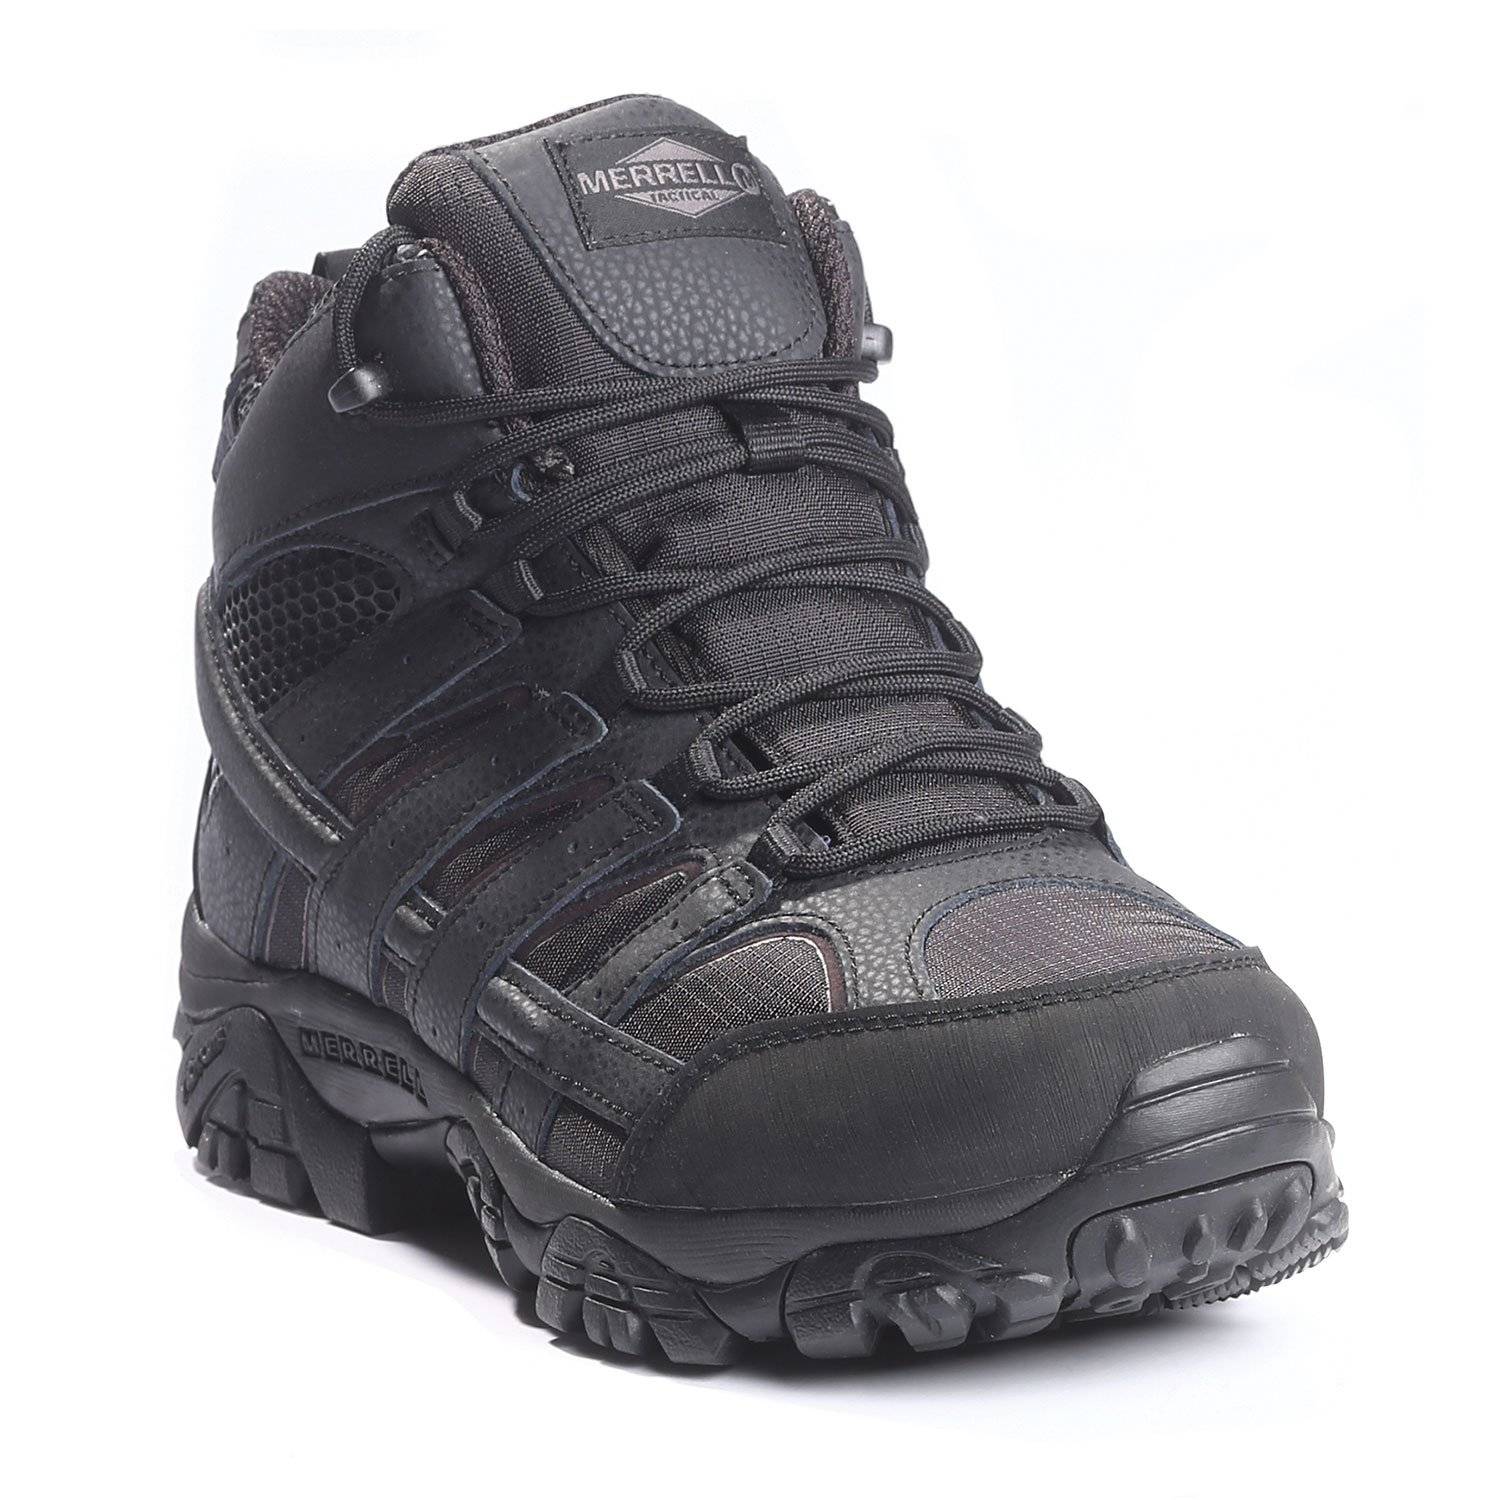 Merrell Moab 2 Mid Tactical Boots Waterproof Wide 9 9.5 10.5 11 11.5 12 NIB 